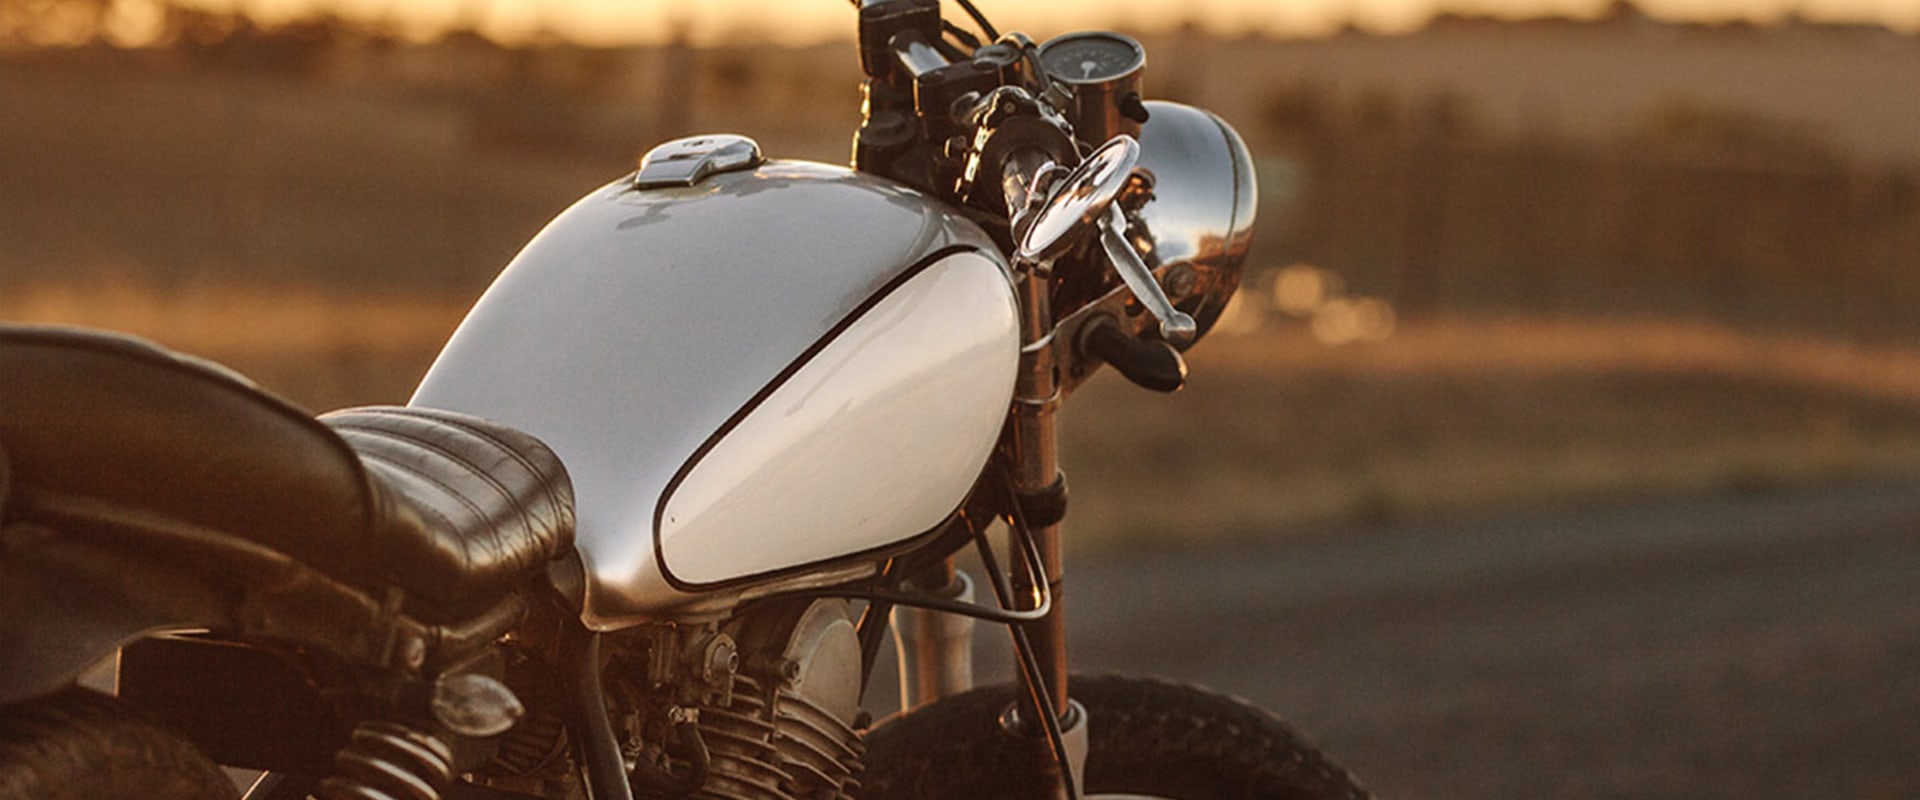 Premium Vintage Motorcycle Insurance